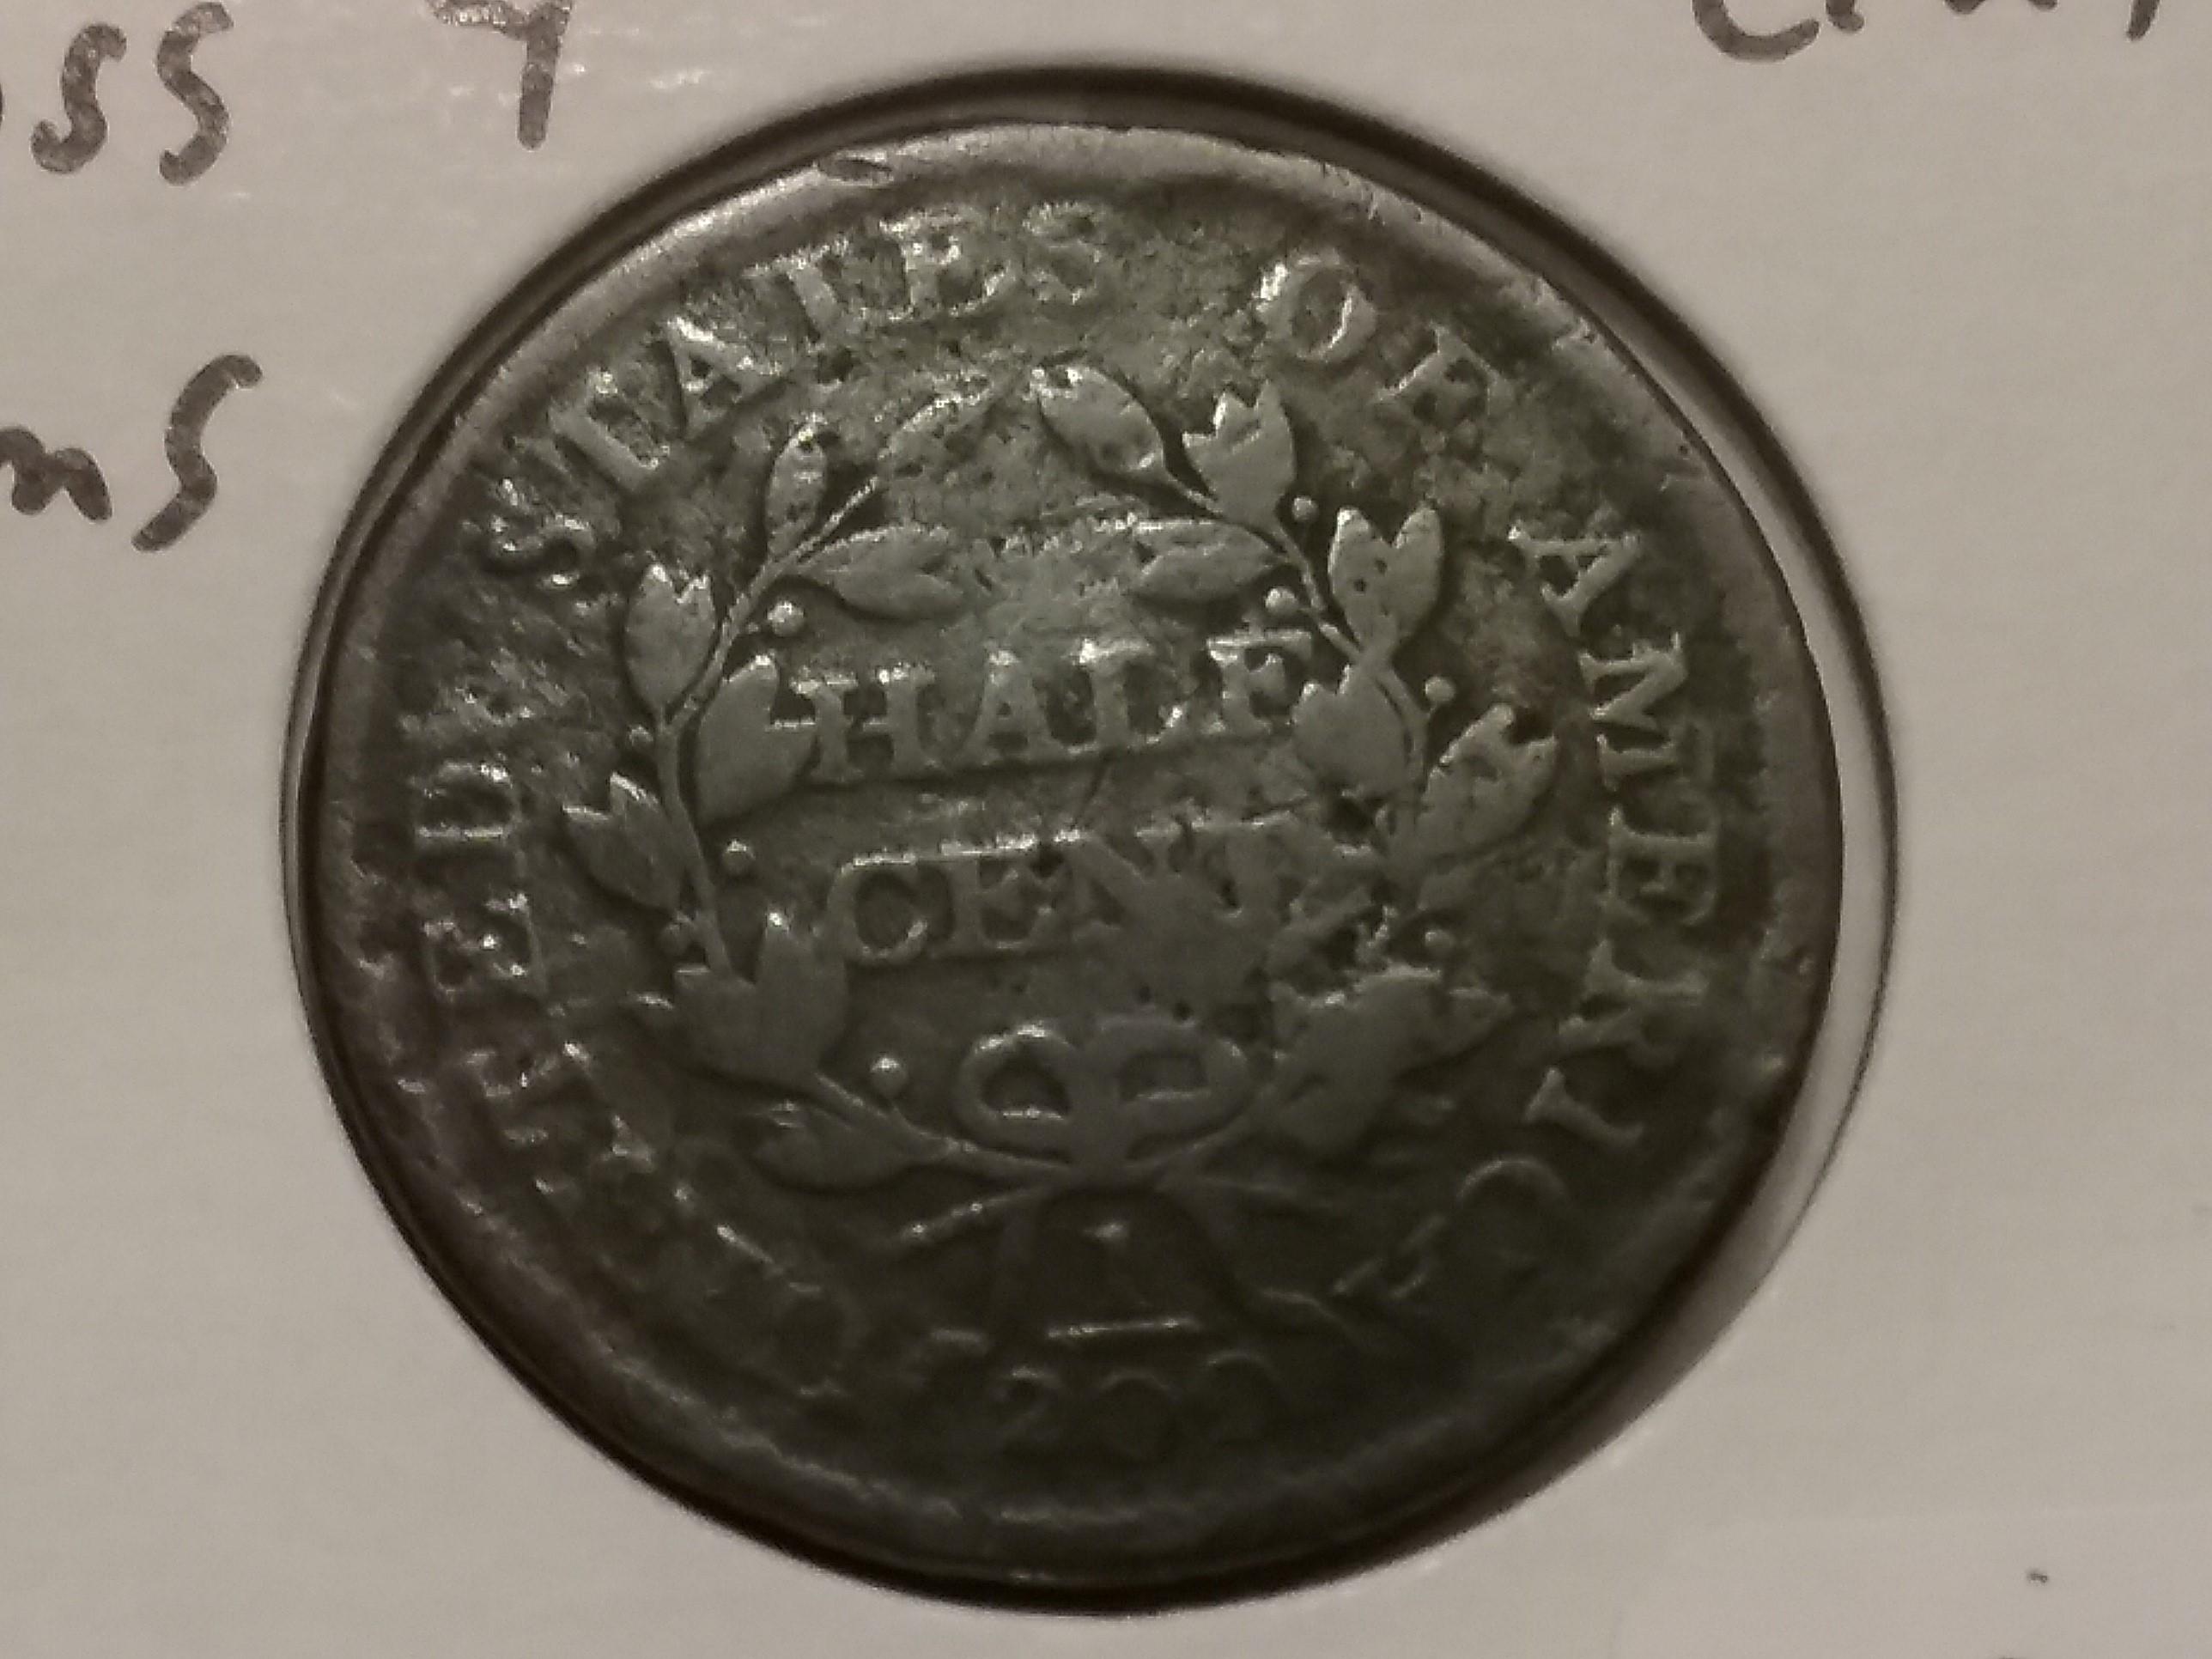 Nice EAC. 1804 Cross "4" Stem Half Cent in Good Details